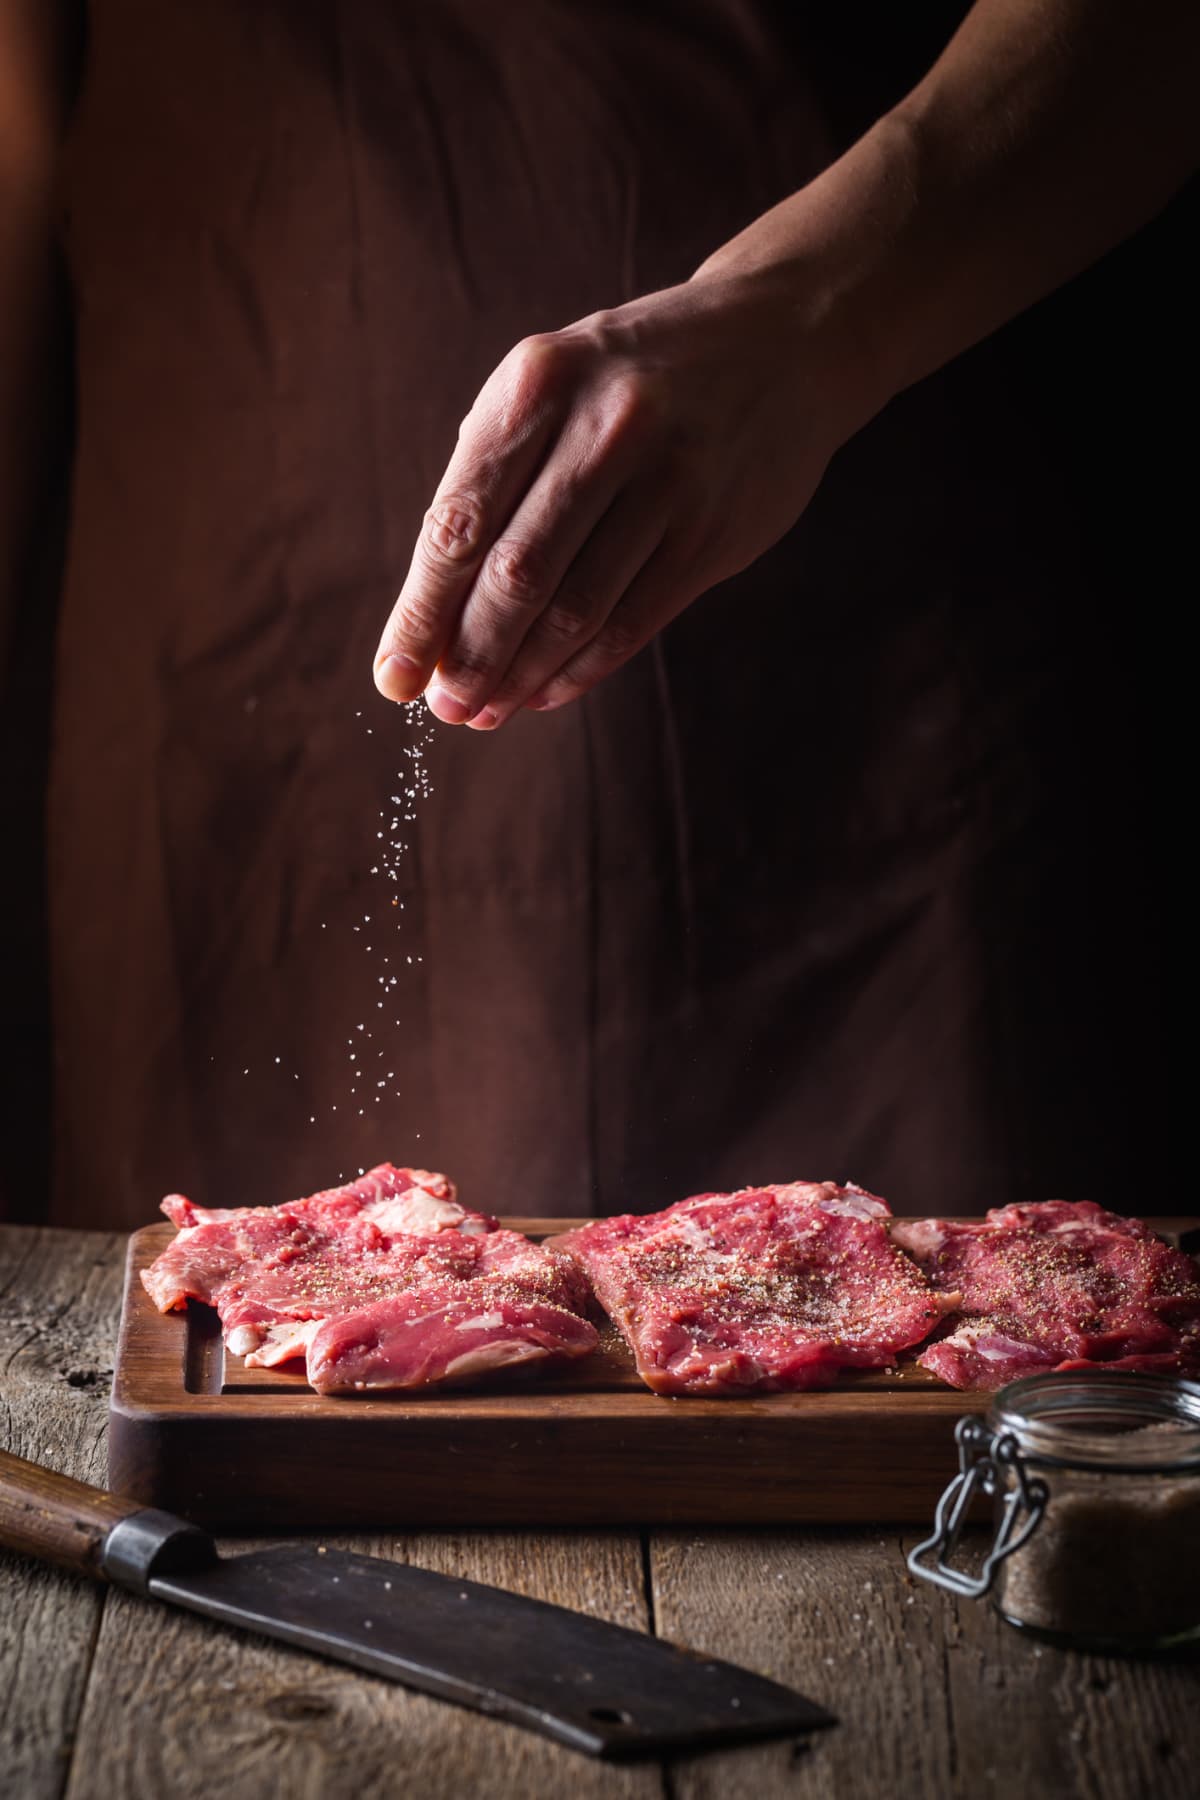 Hand seasoning meat with salt.